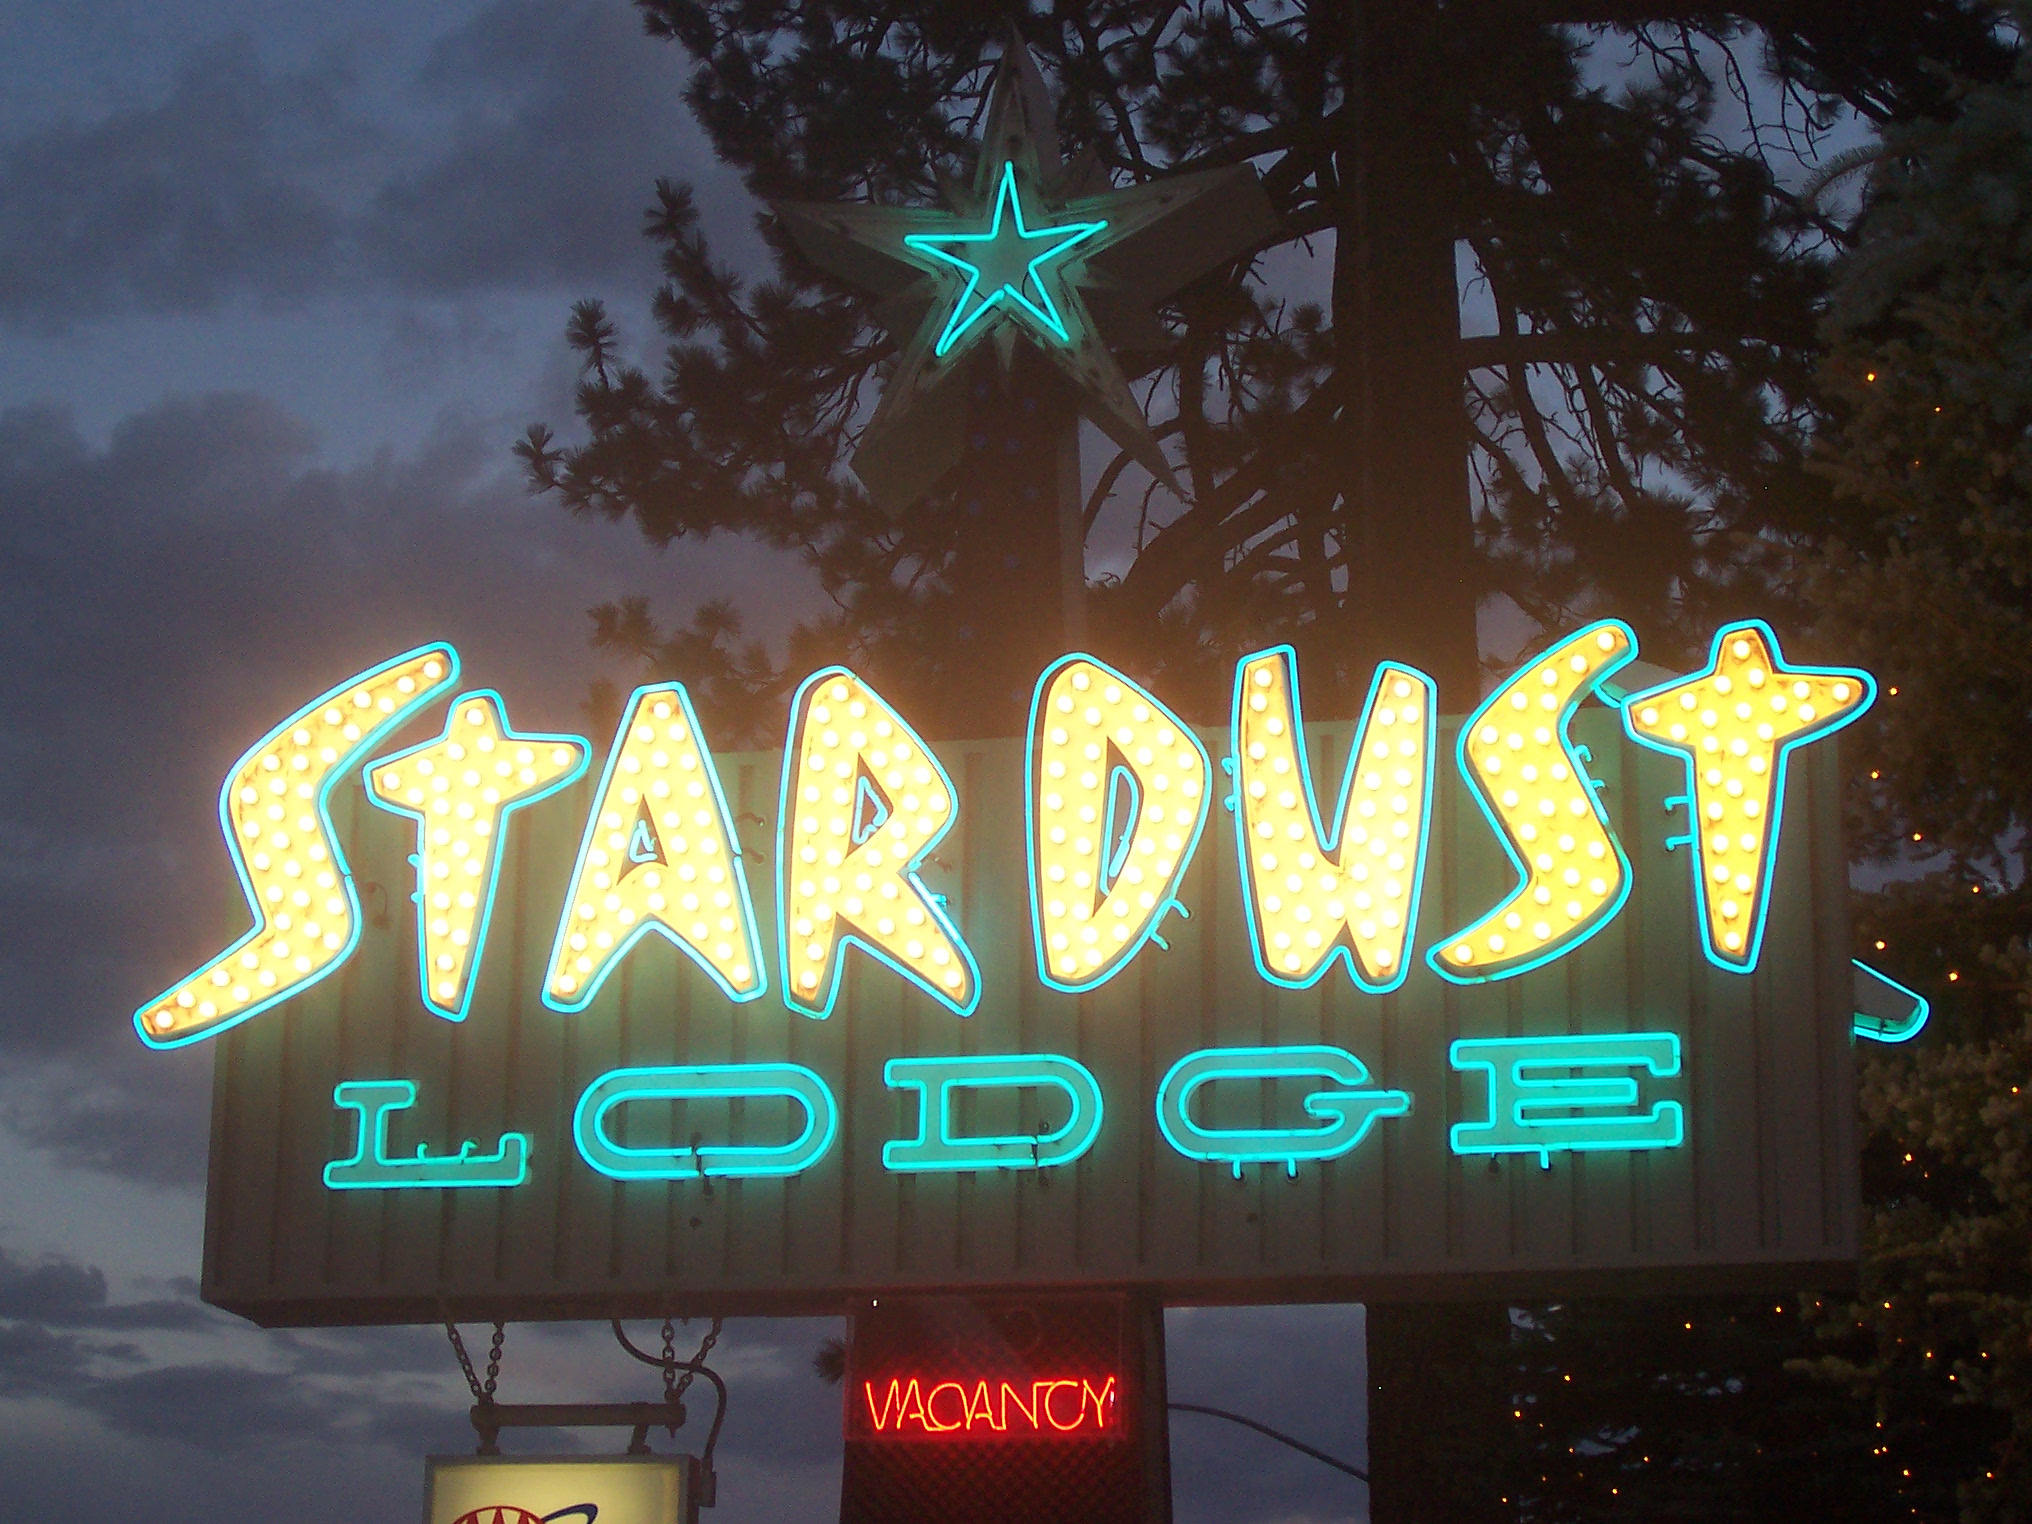 Stardust Lodge